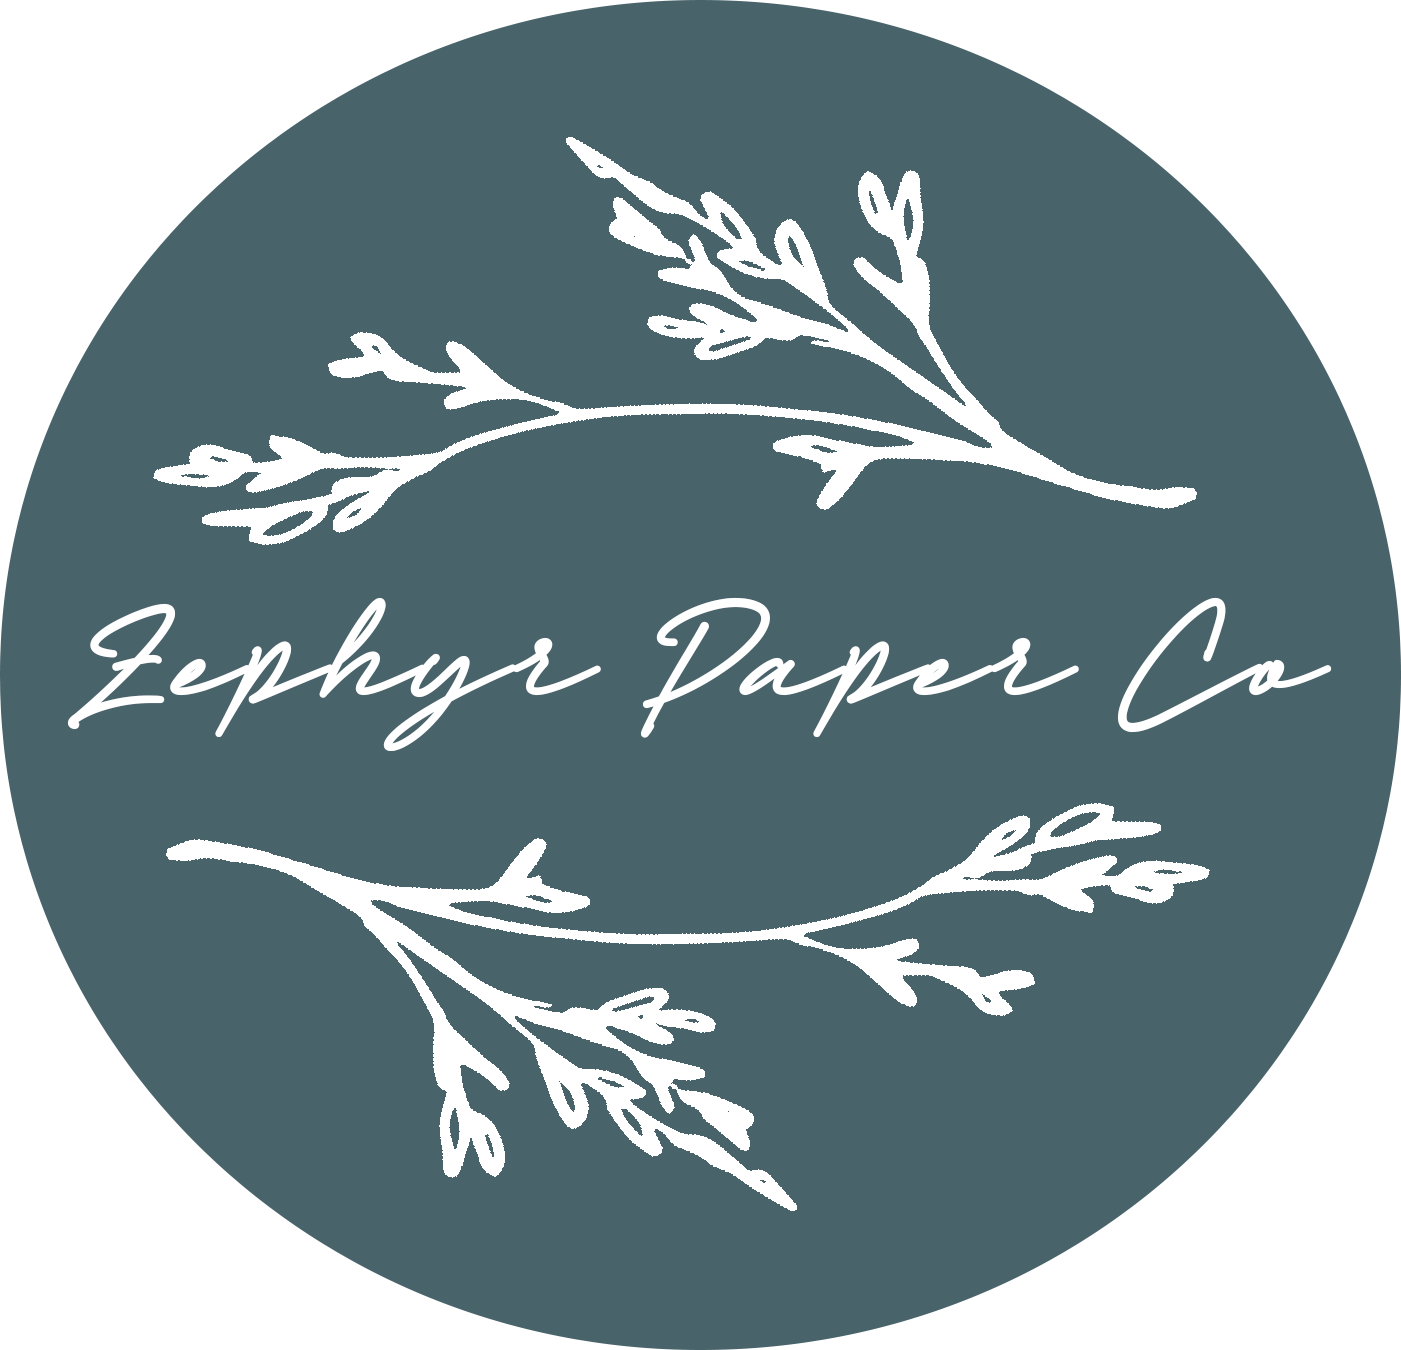 Zephyr Paper Co